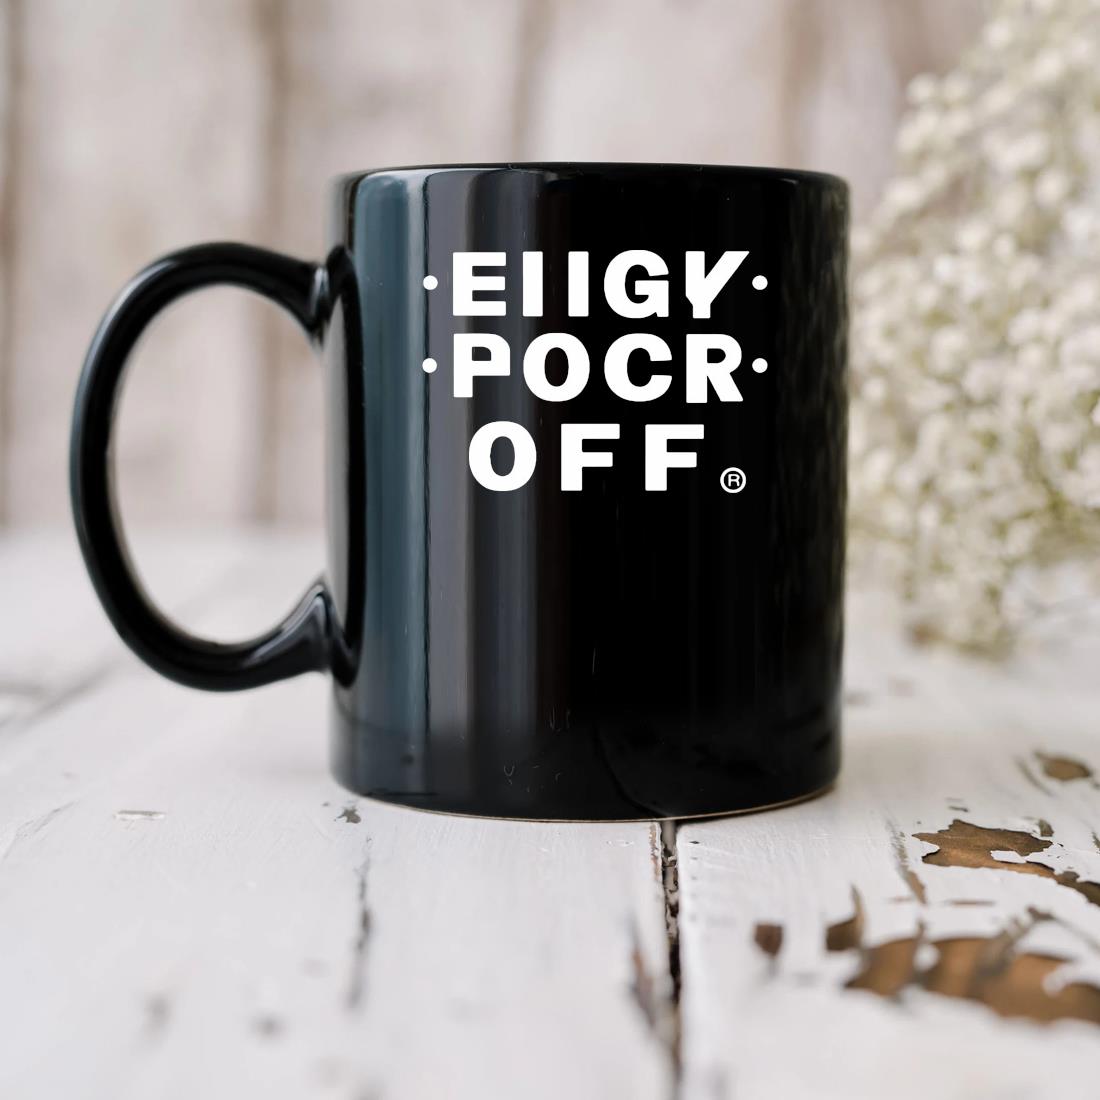 Eiigy Pocr Fck Off Mug